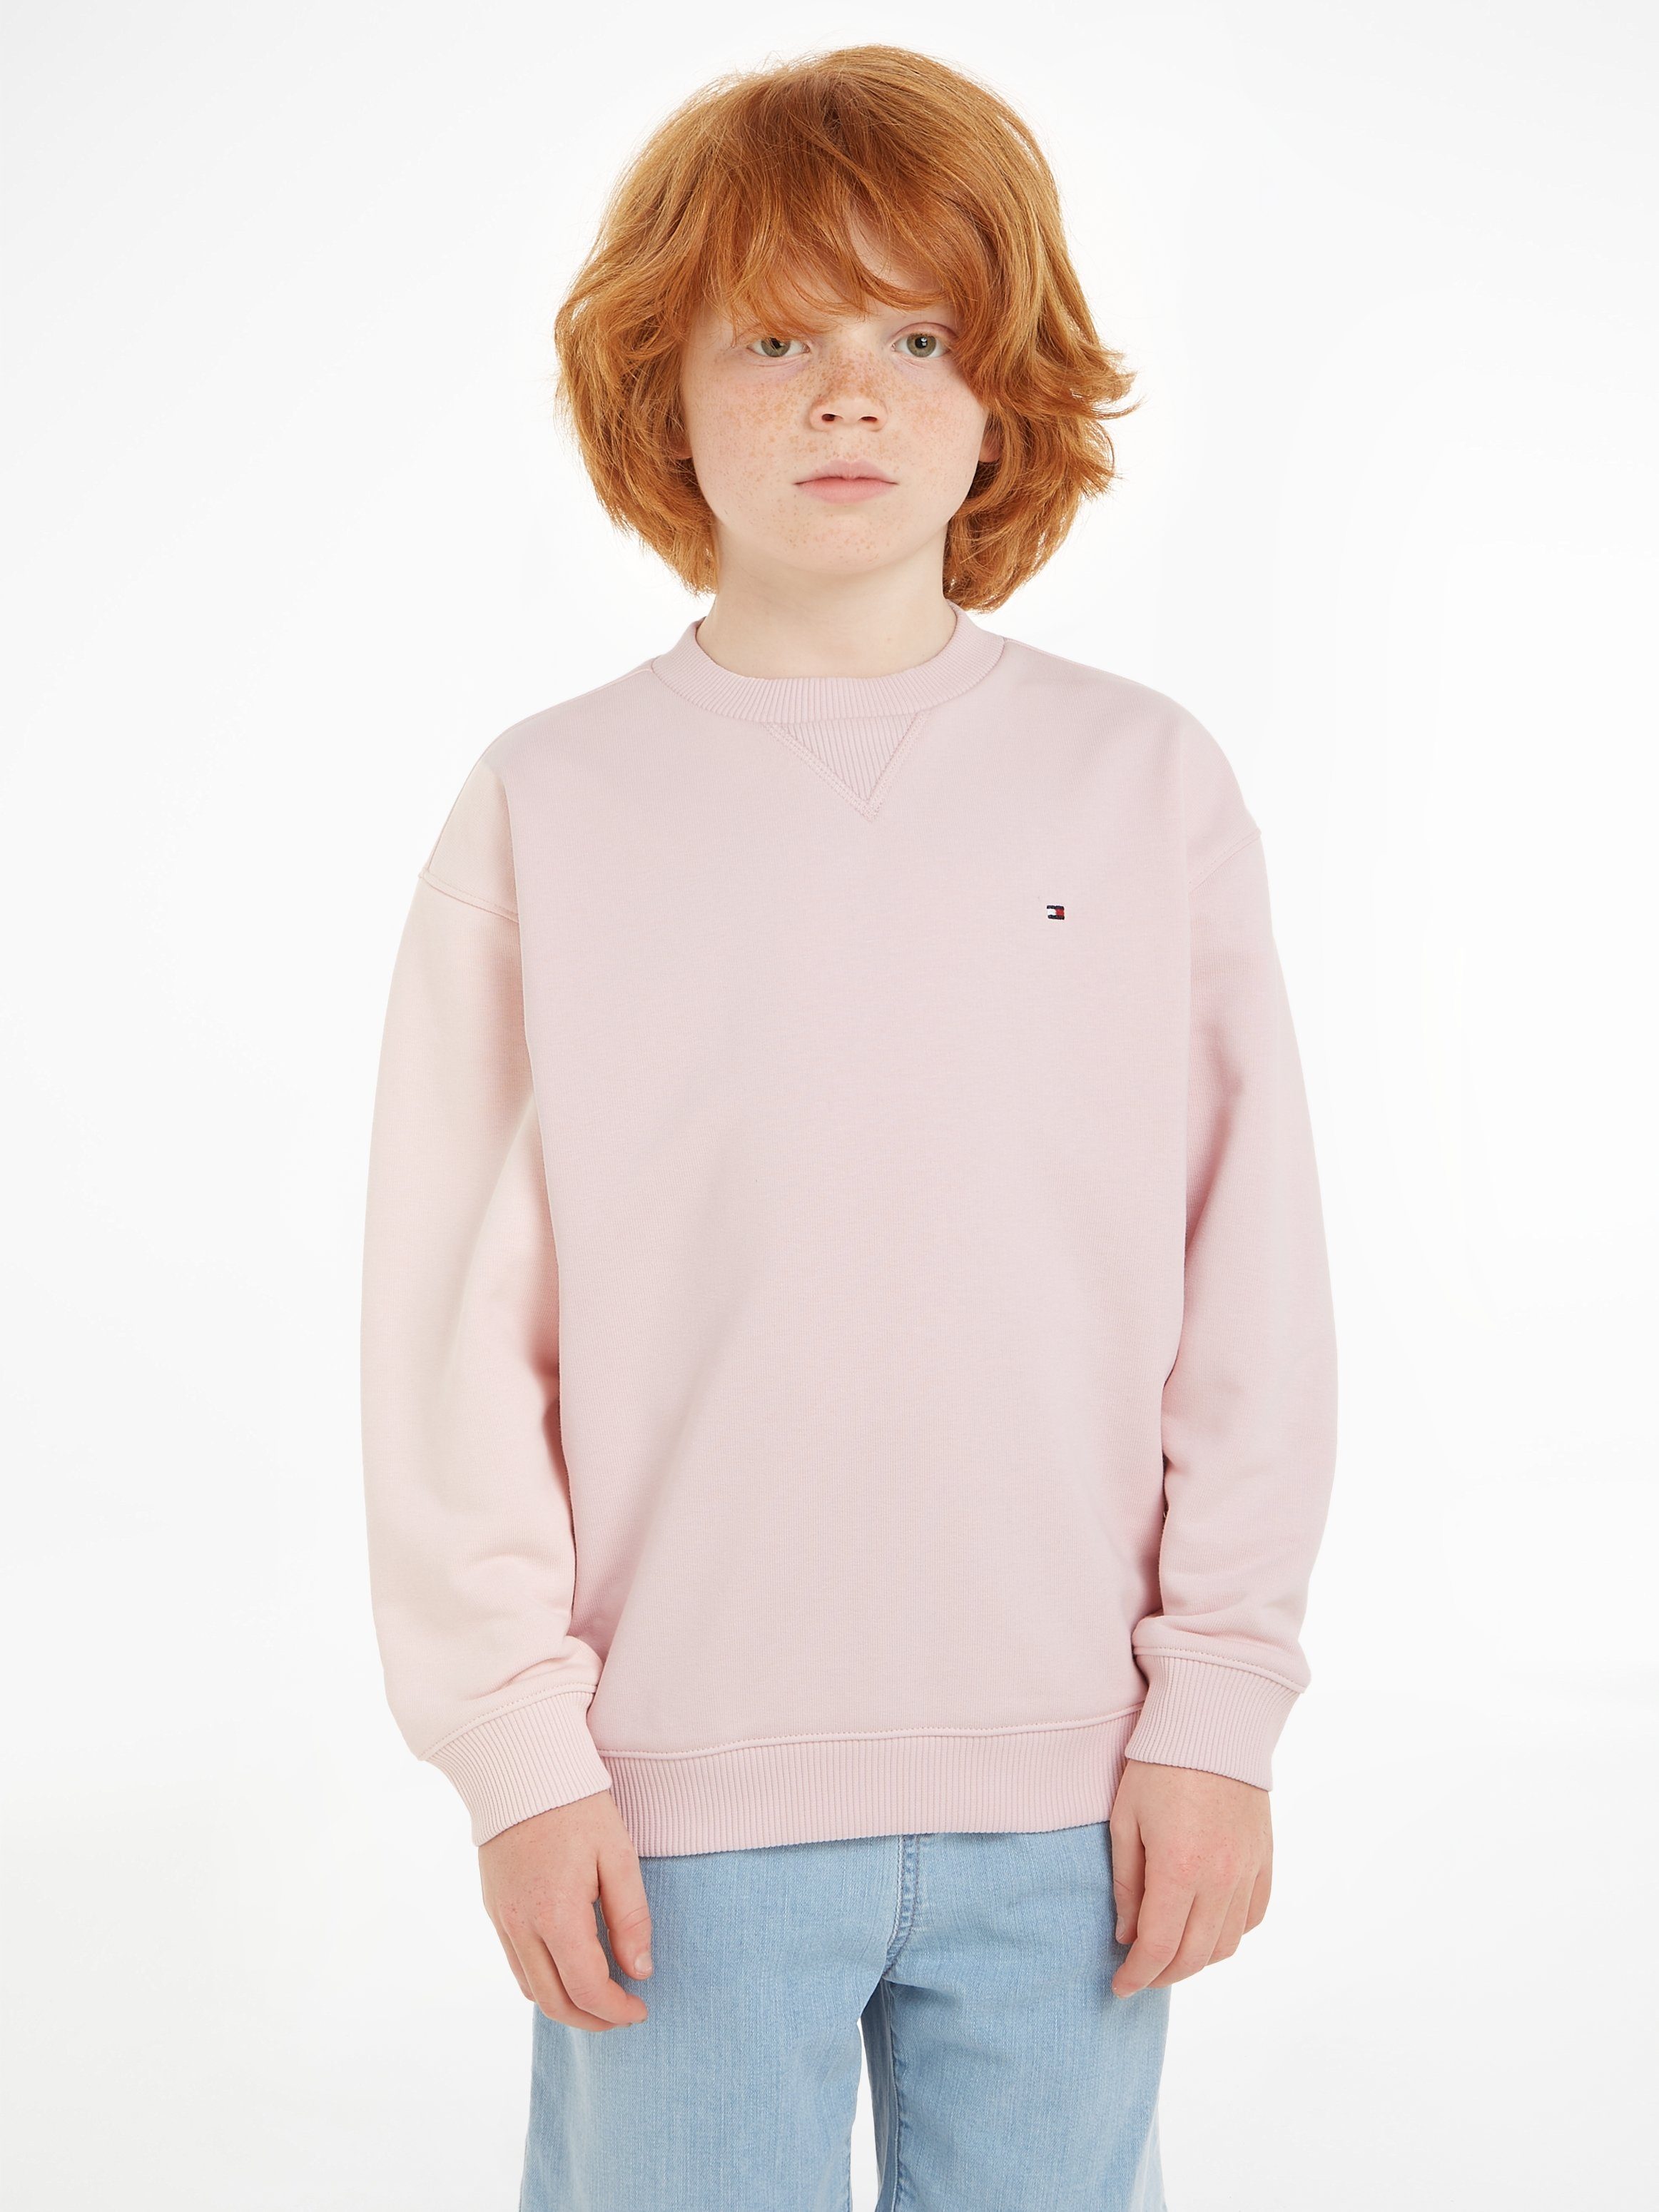 Tommy Hilfiger Sweatshirt U TIMELESS Pink Unifarbe in SWEATSHIRT Whimsy